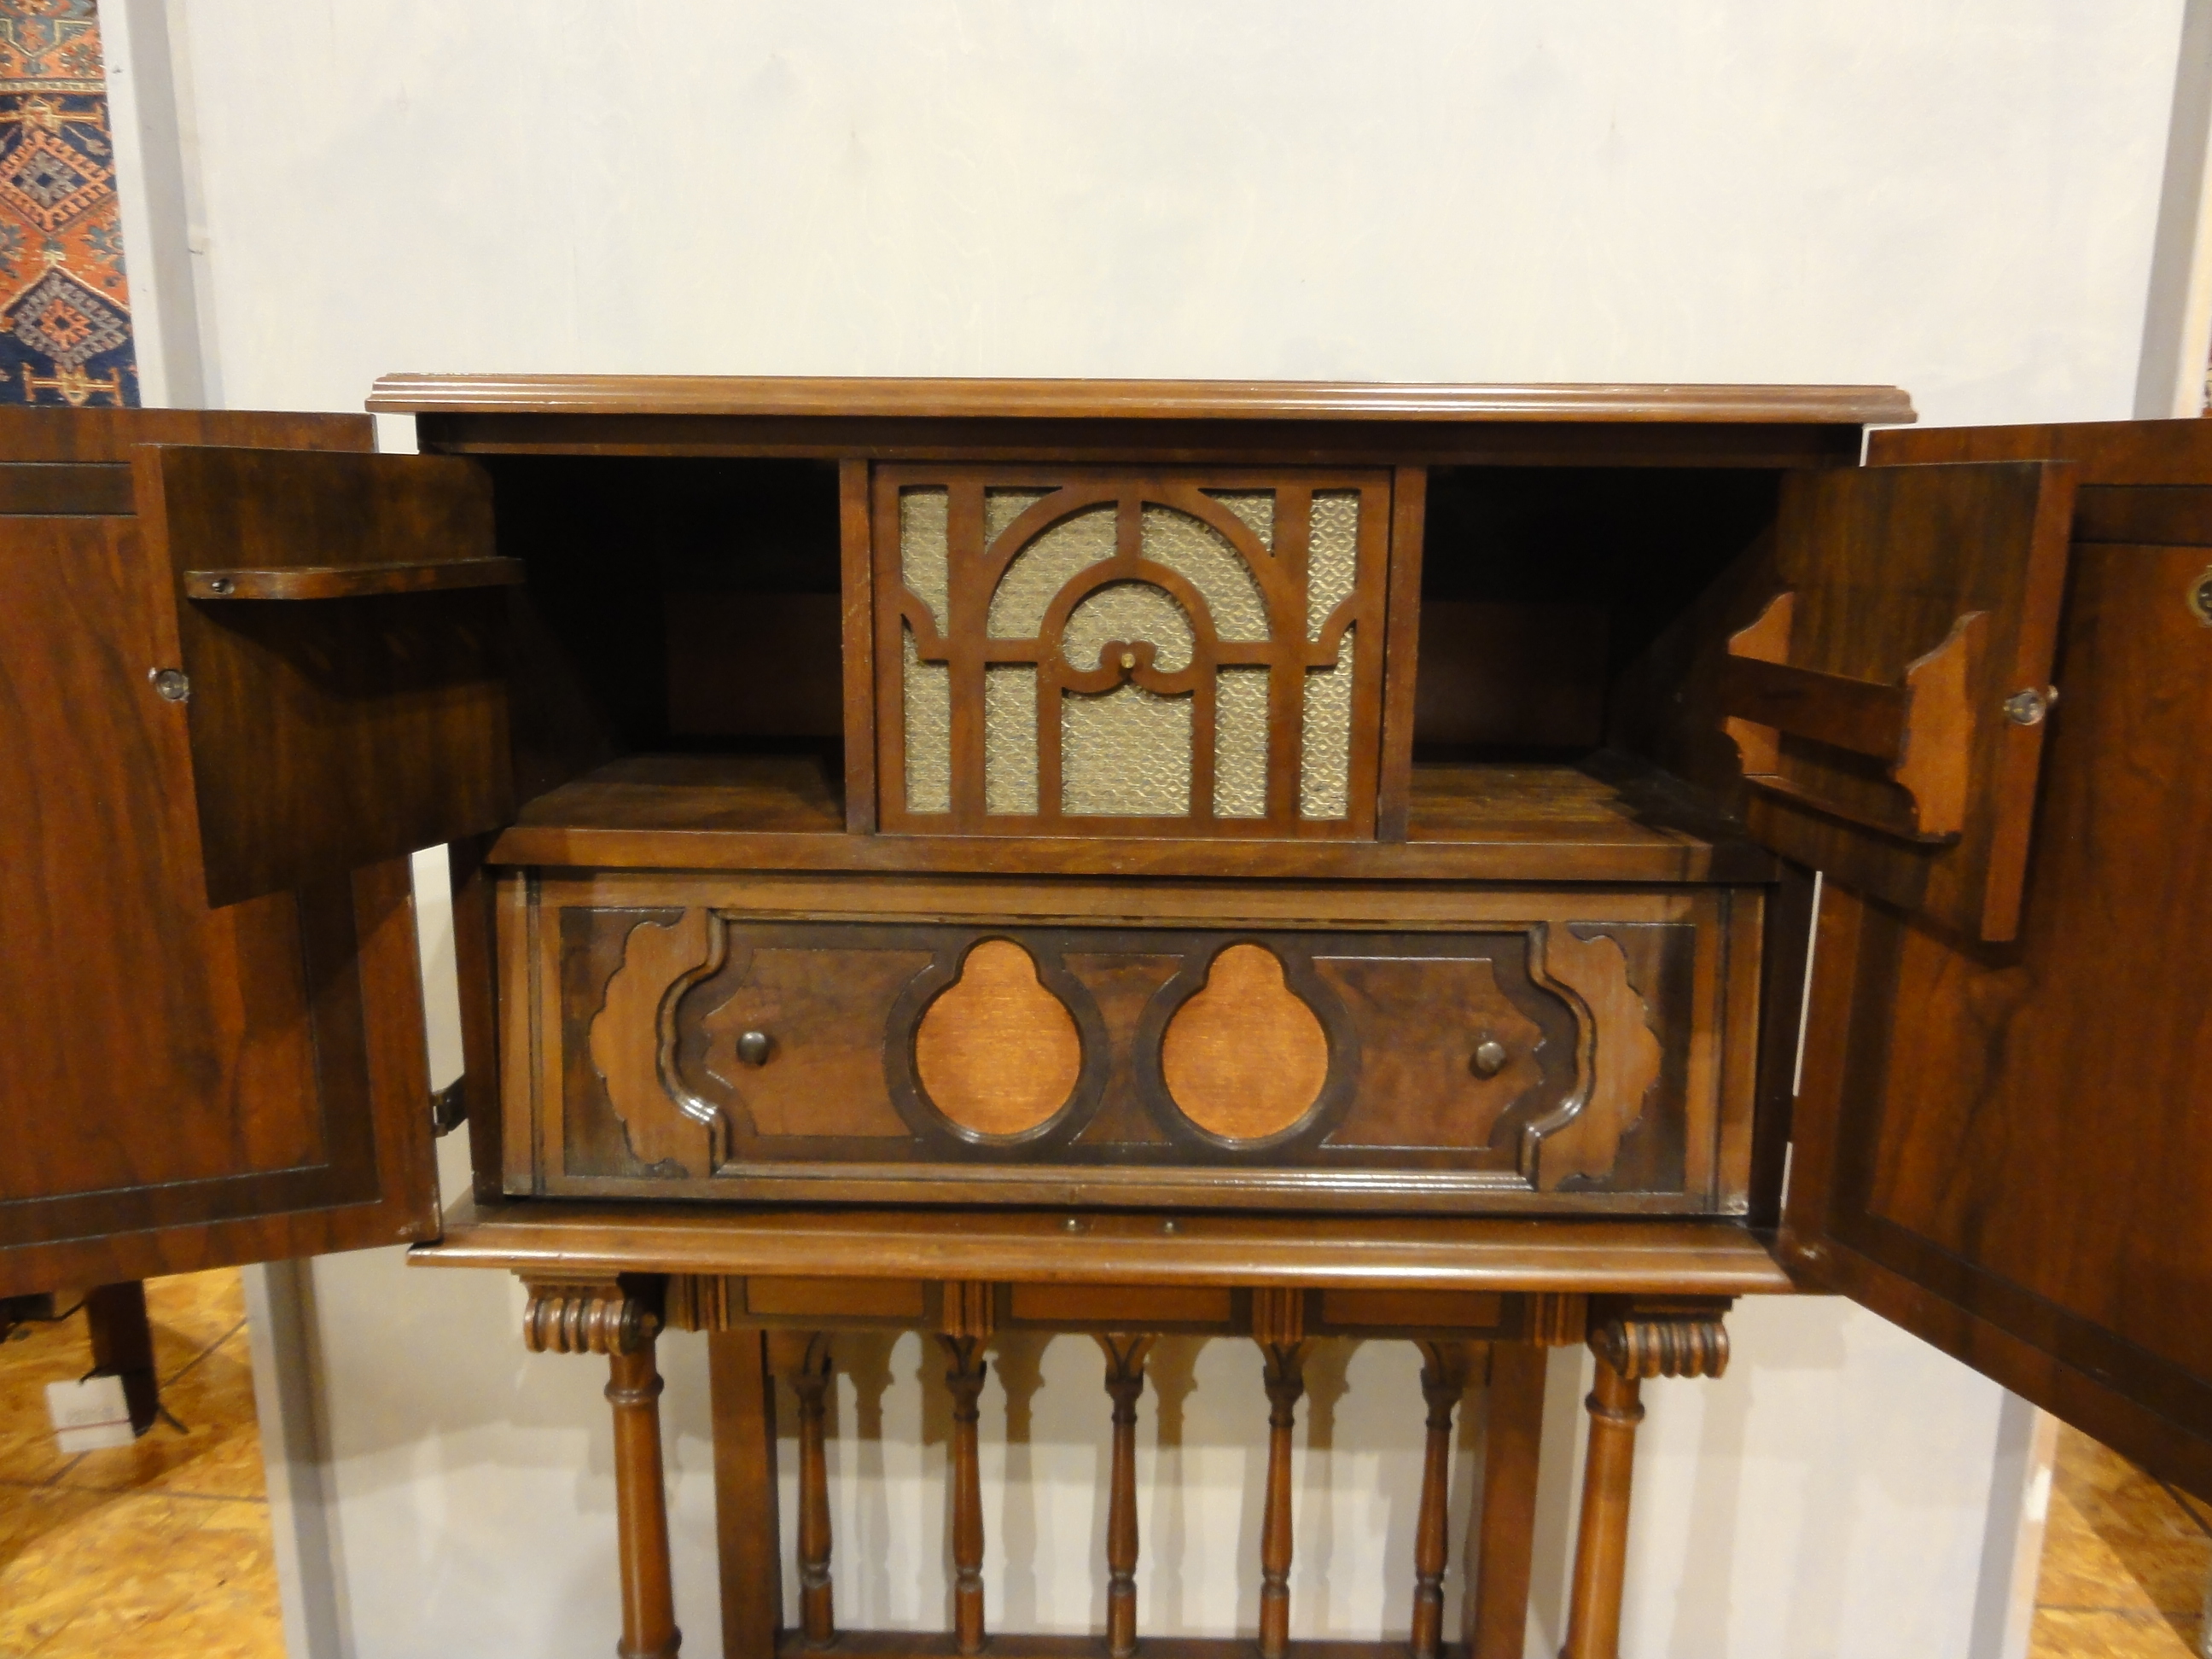 Antique Radio Cabinet. A genuine good condition antique sold by the Santa Barbara Design Center in Santa Barbara, California.